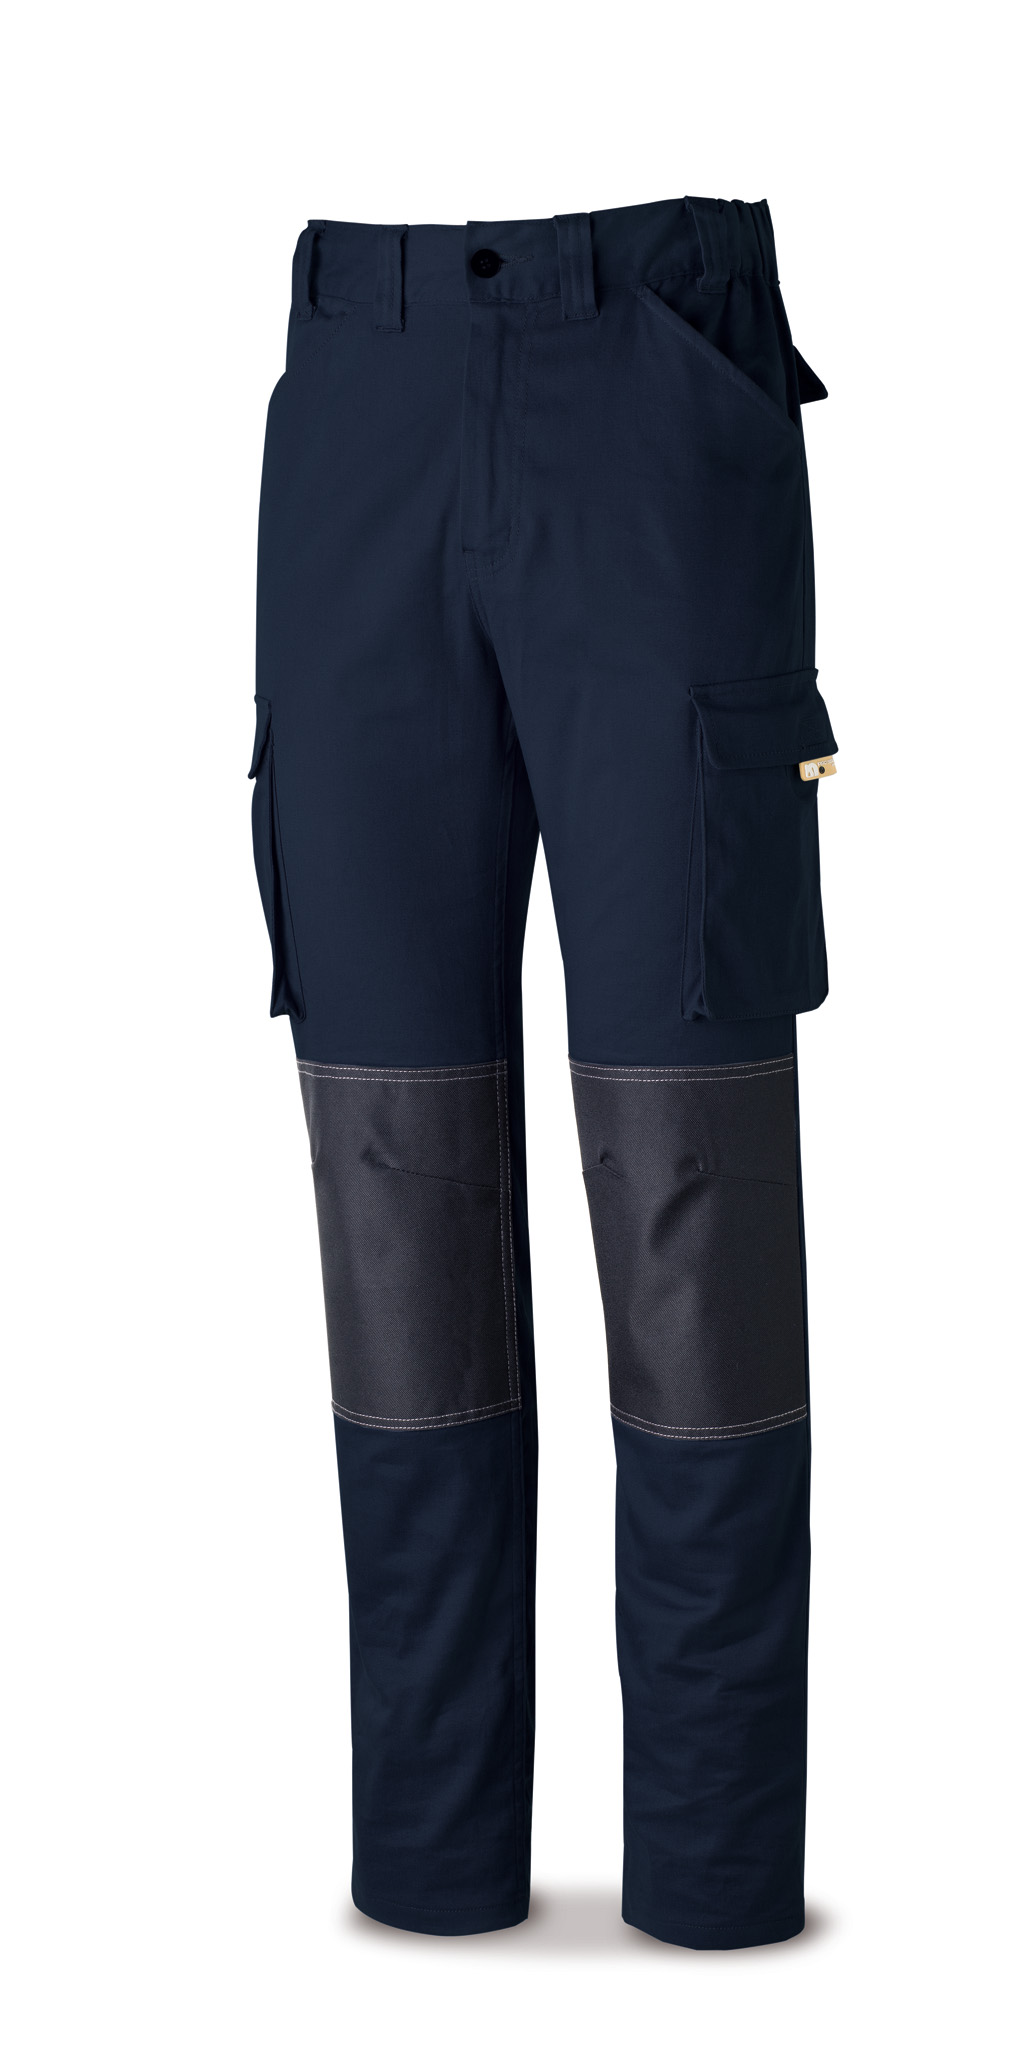 588-PSTRA Workwear Pro Series ELASTIC cotton and elastene pants. Navy blue.